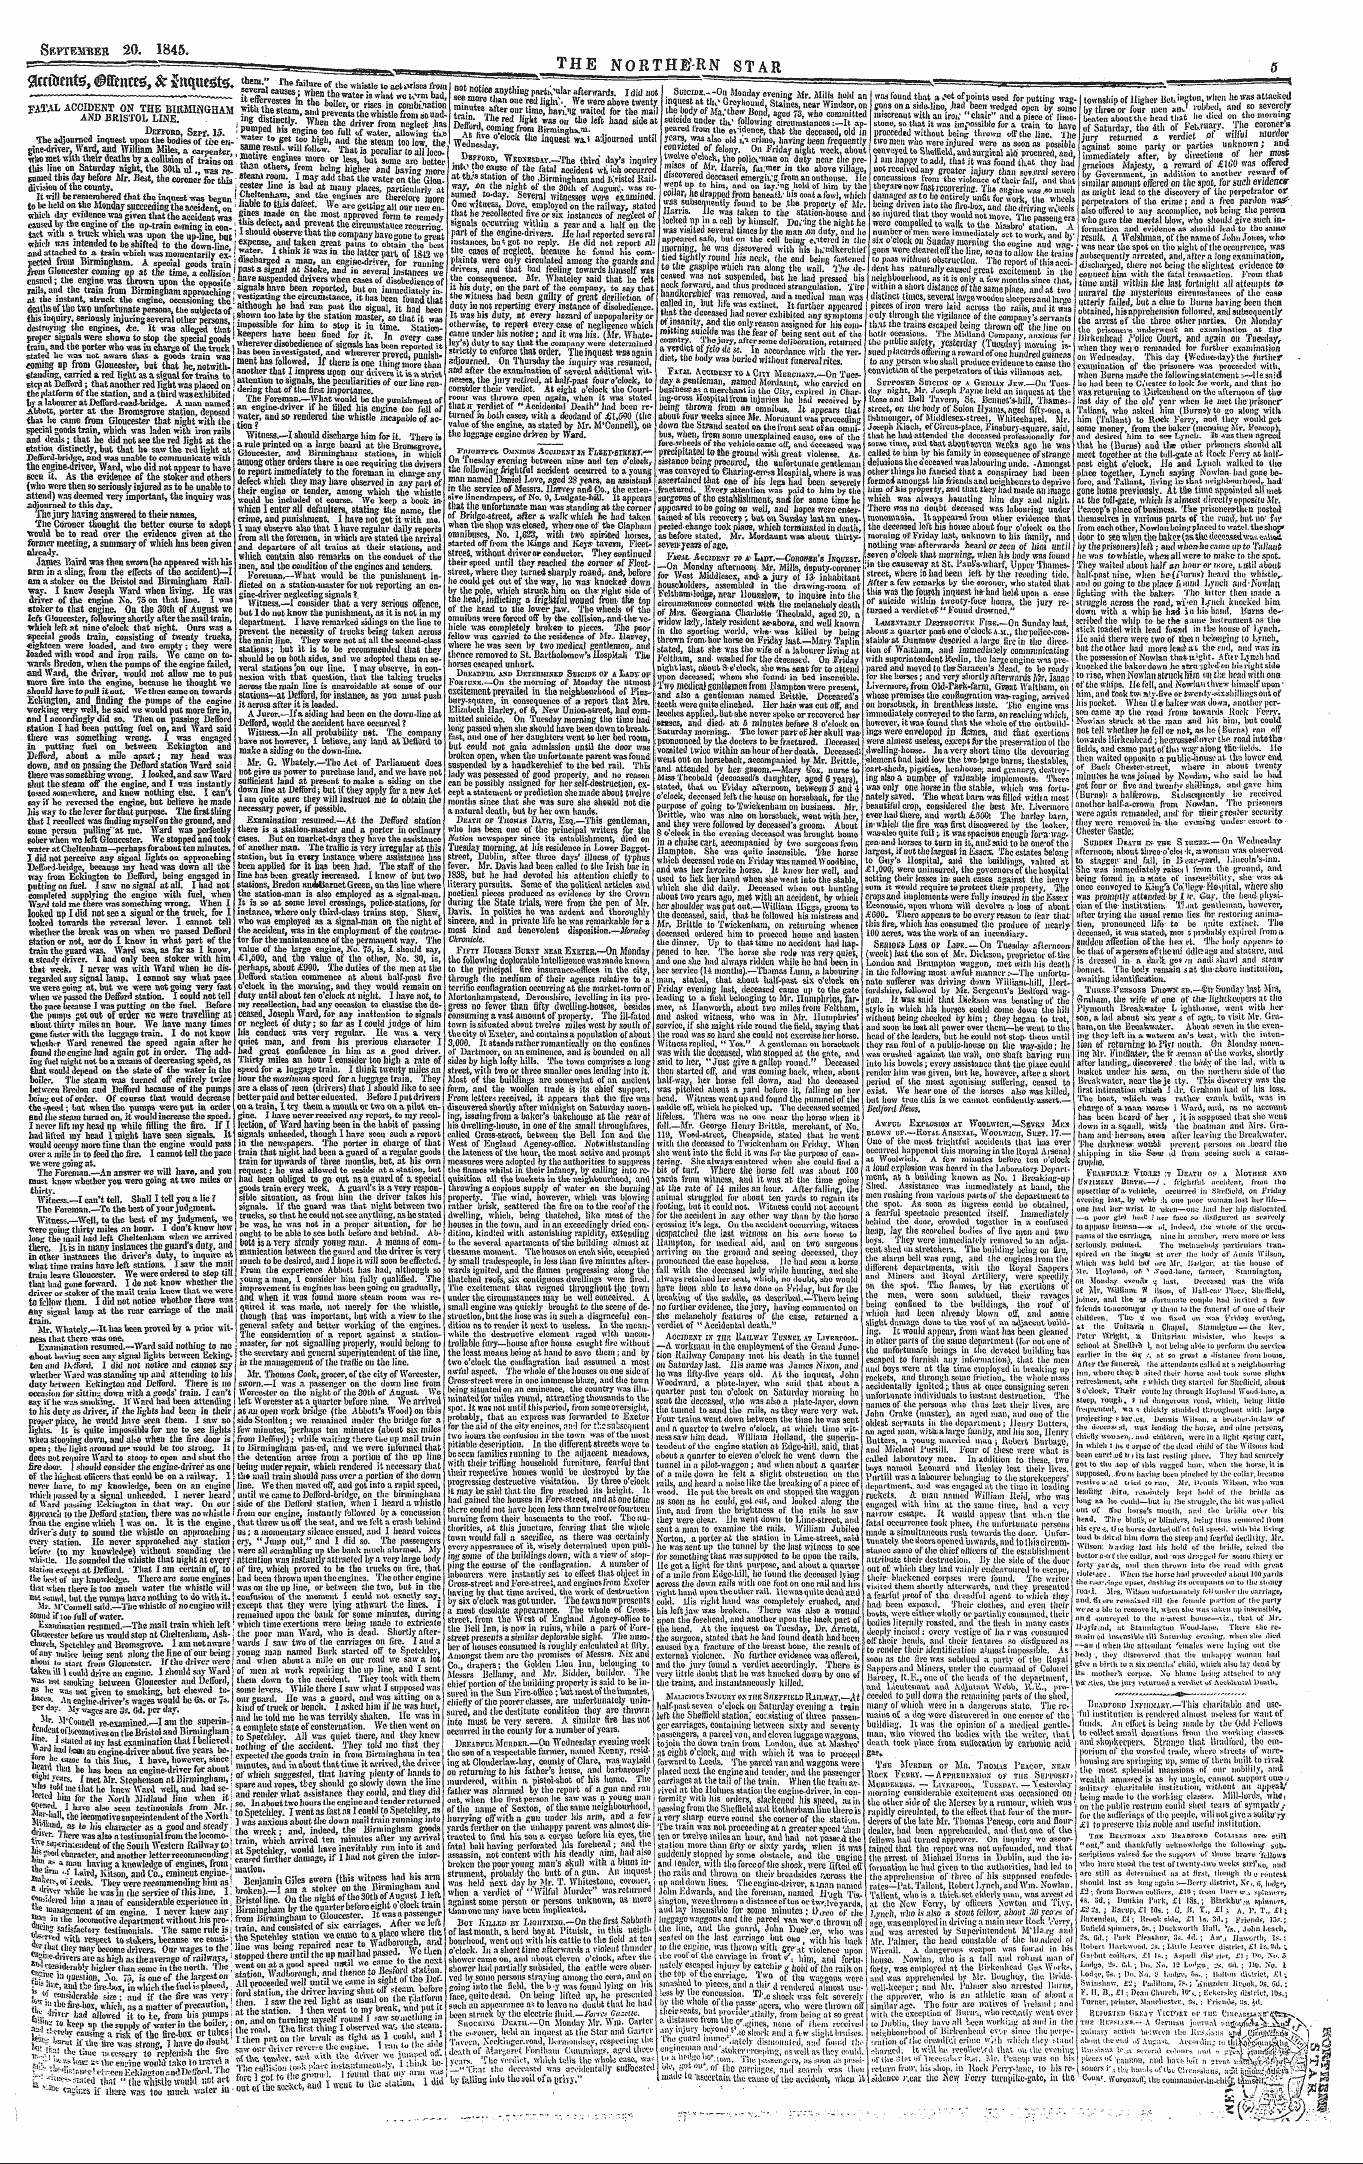 Northern Star (1837-1852): jS F Y, 3rd edition - ^N*Rayeti--V. Vri, Oui1cvs^-_Isji^ , Iin...